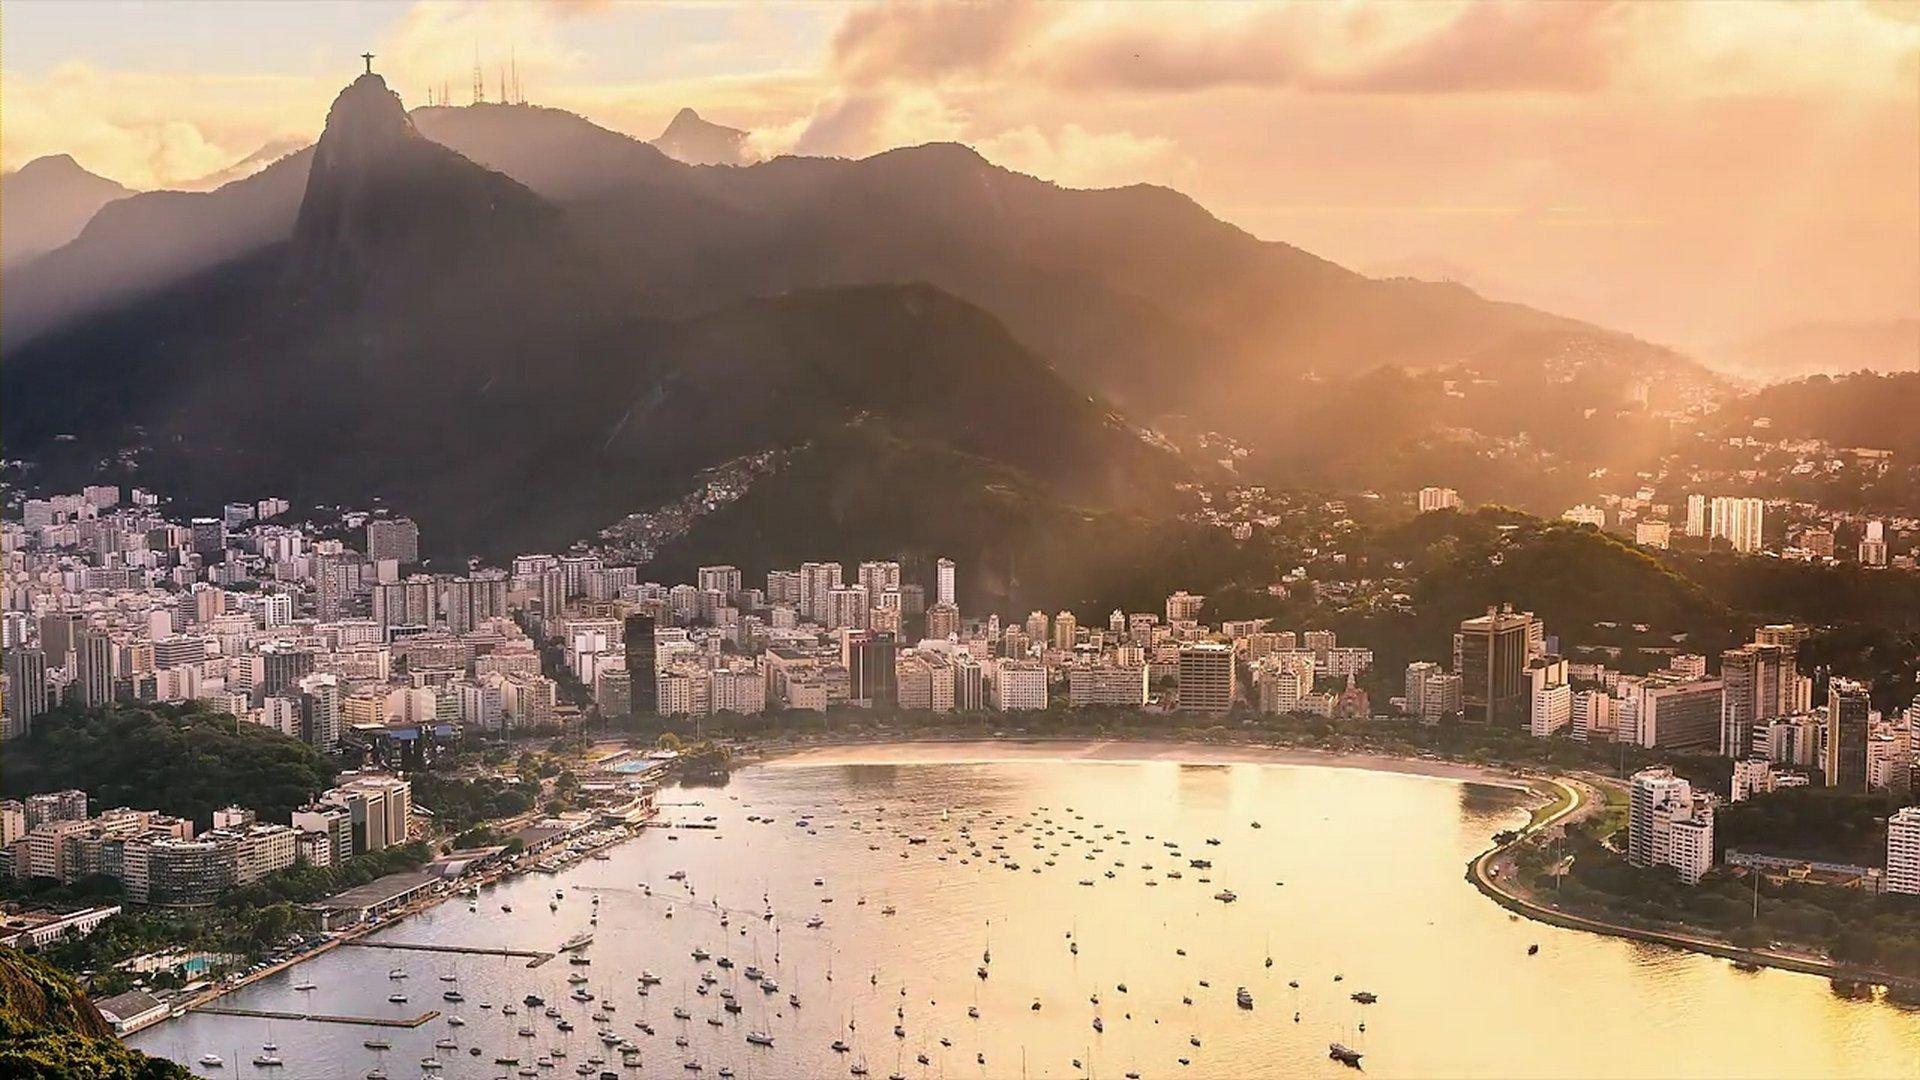 Rio de Janeiro Wallpaper Image Photo Picture Background